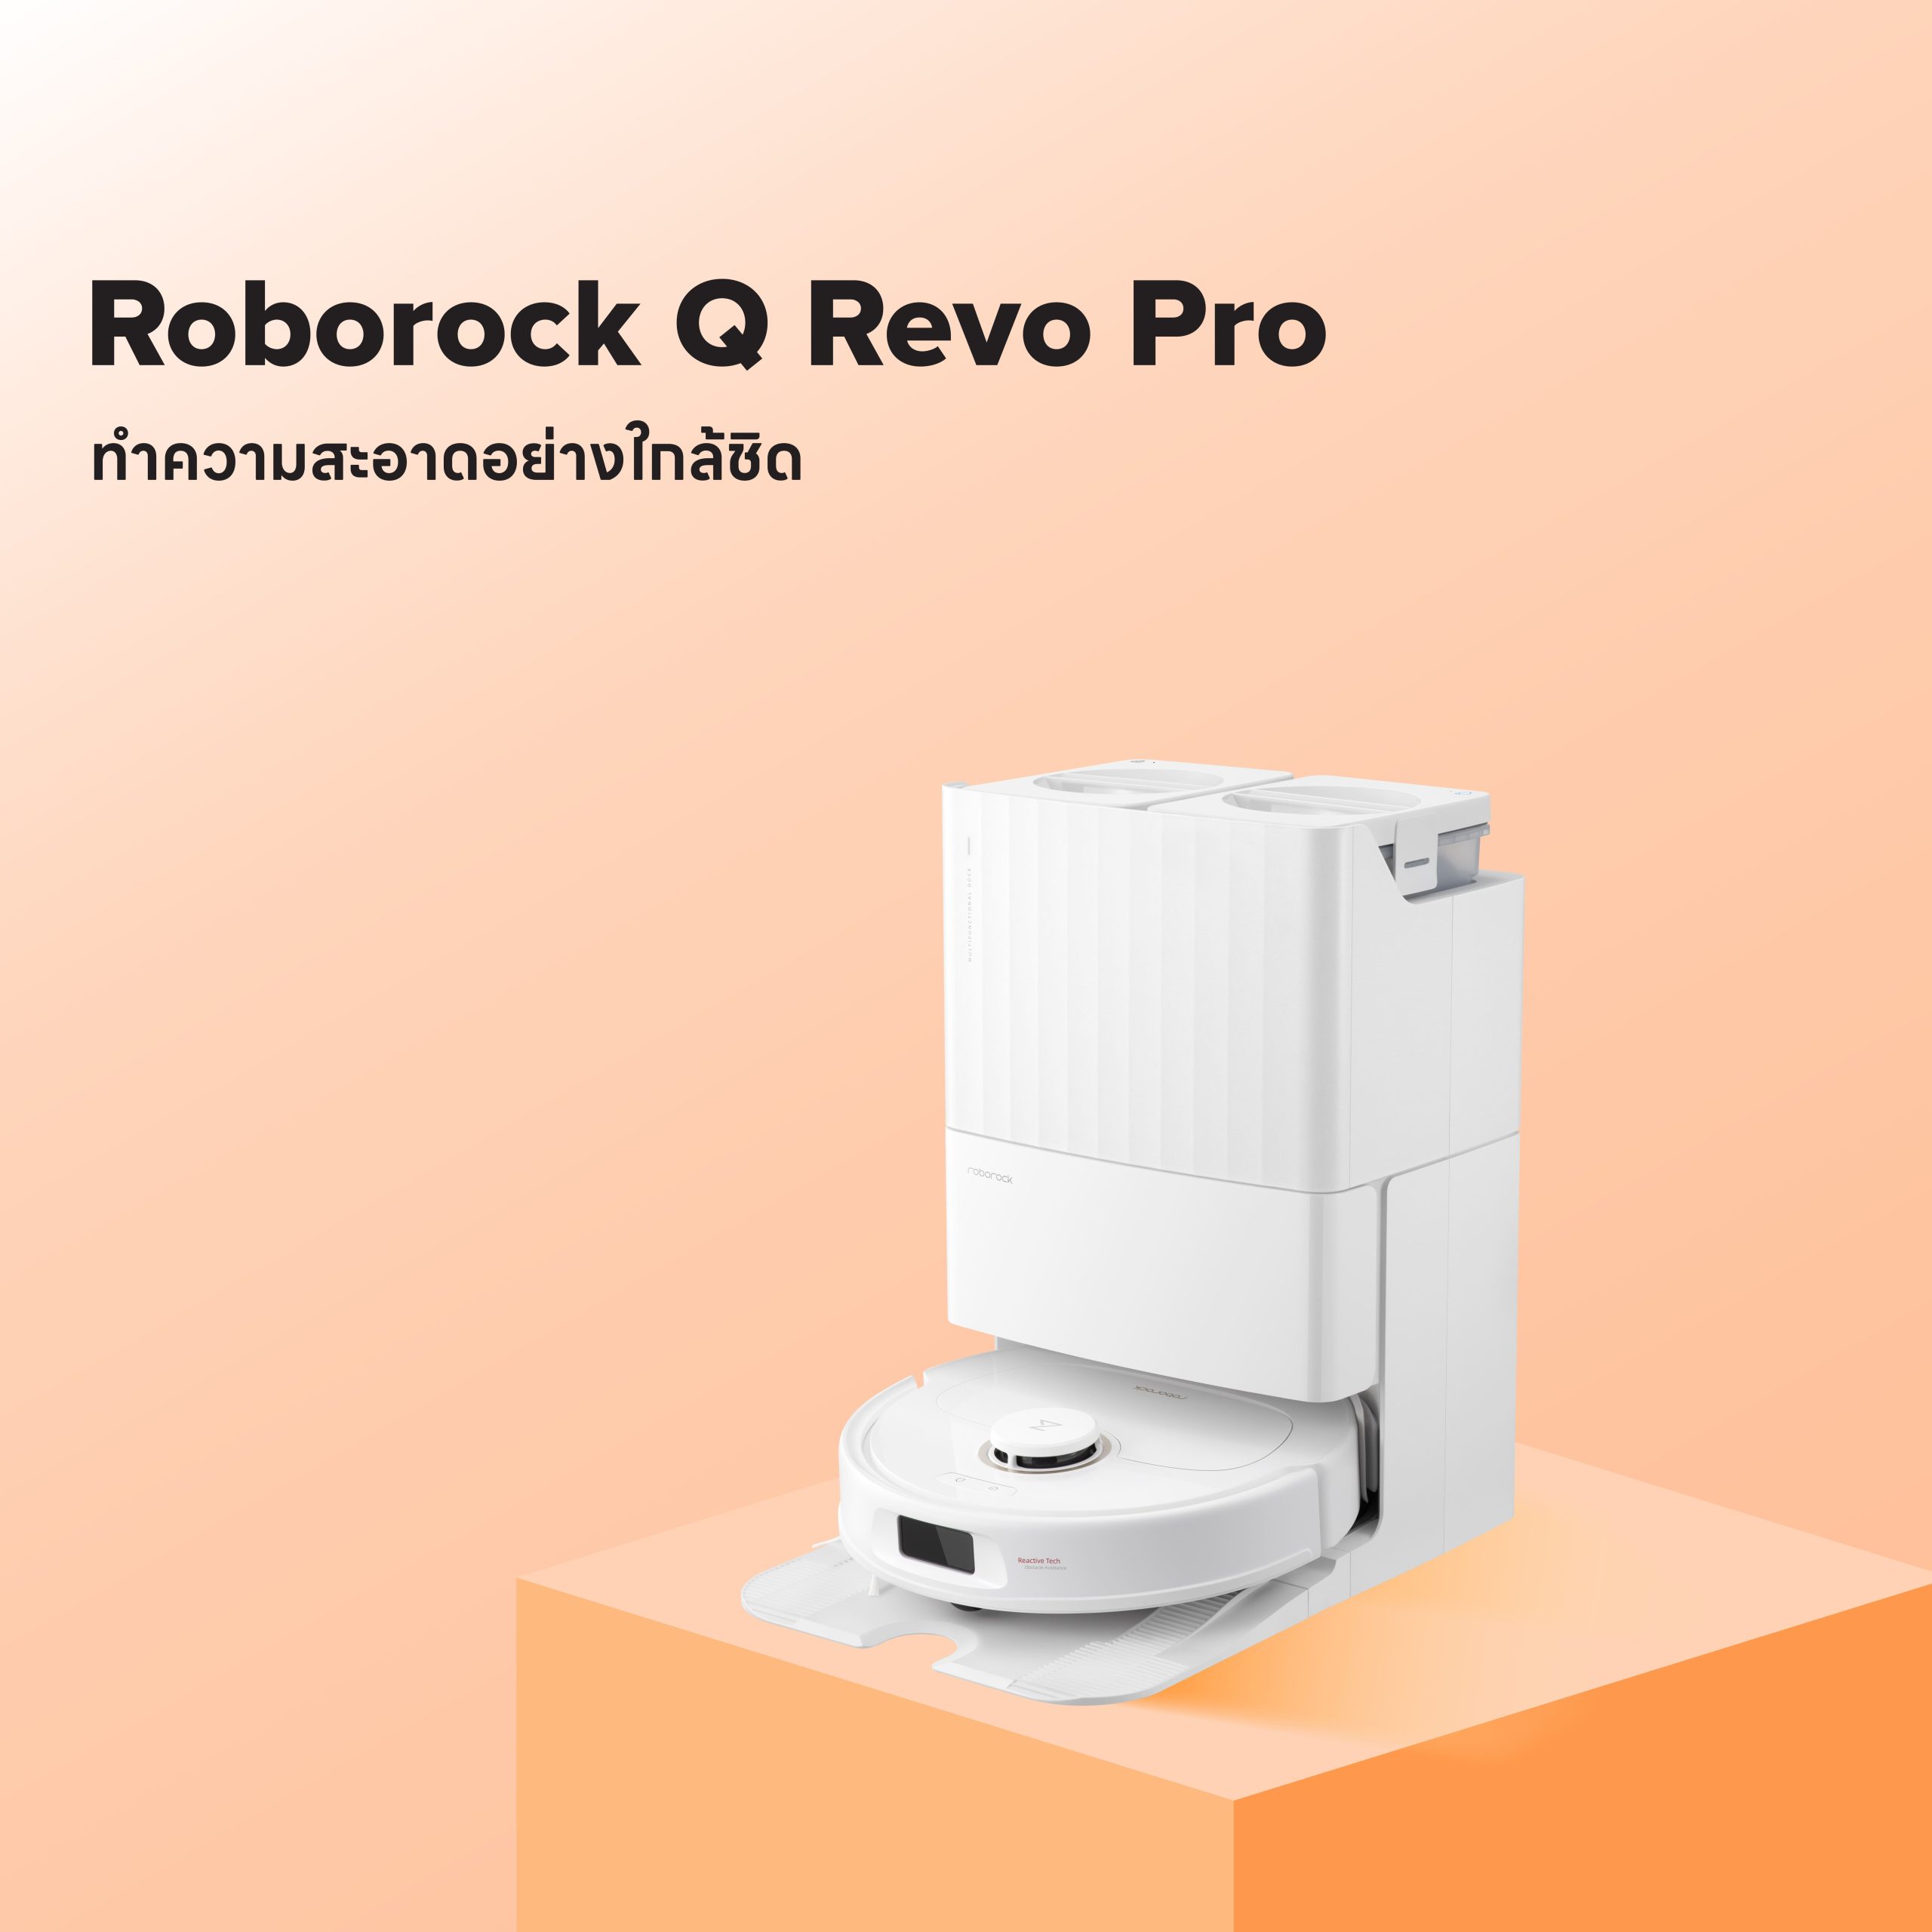 Roborock Q Revo Pro: หุ่นยนต์ดูดฝุ่นถูพื้นอัจฉริยะ ครบจบในแท่นเดียว!